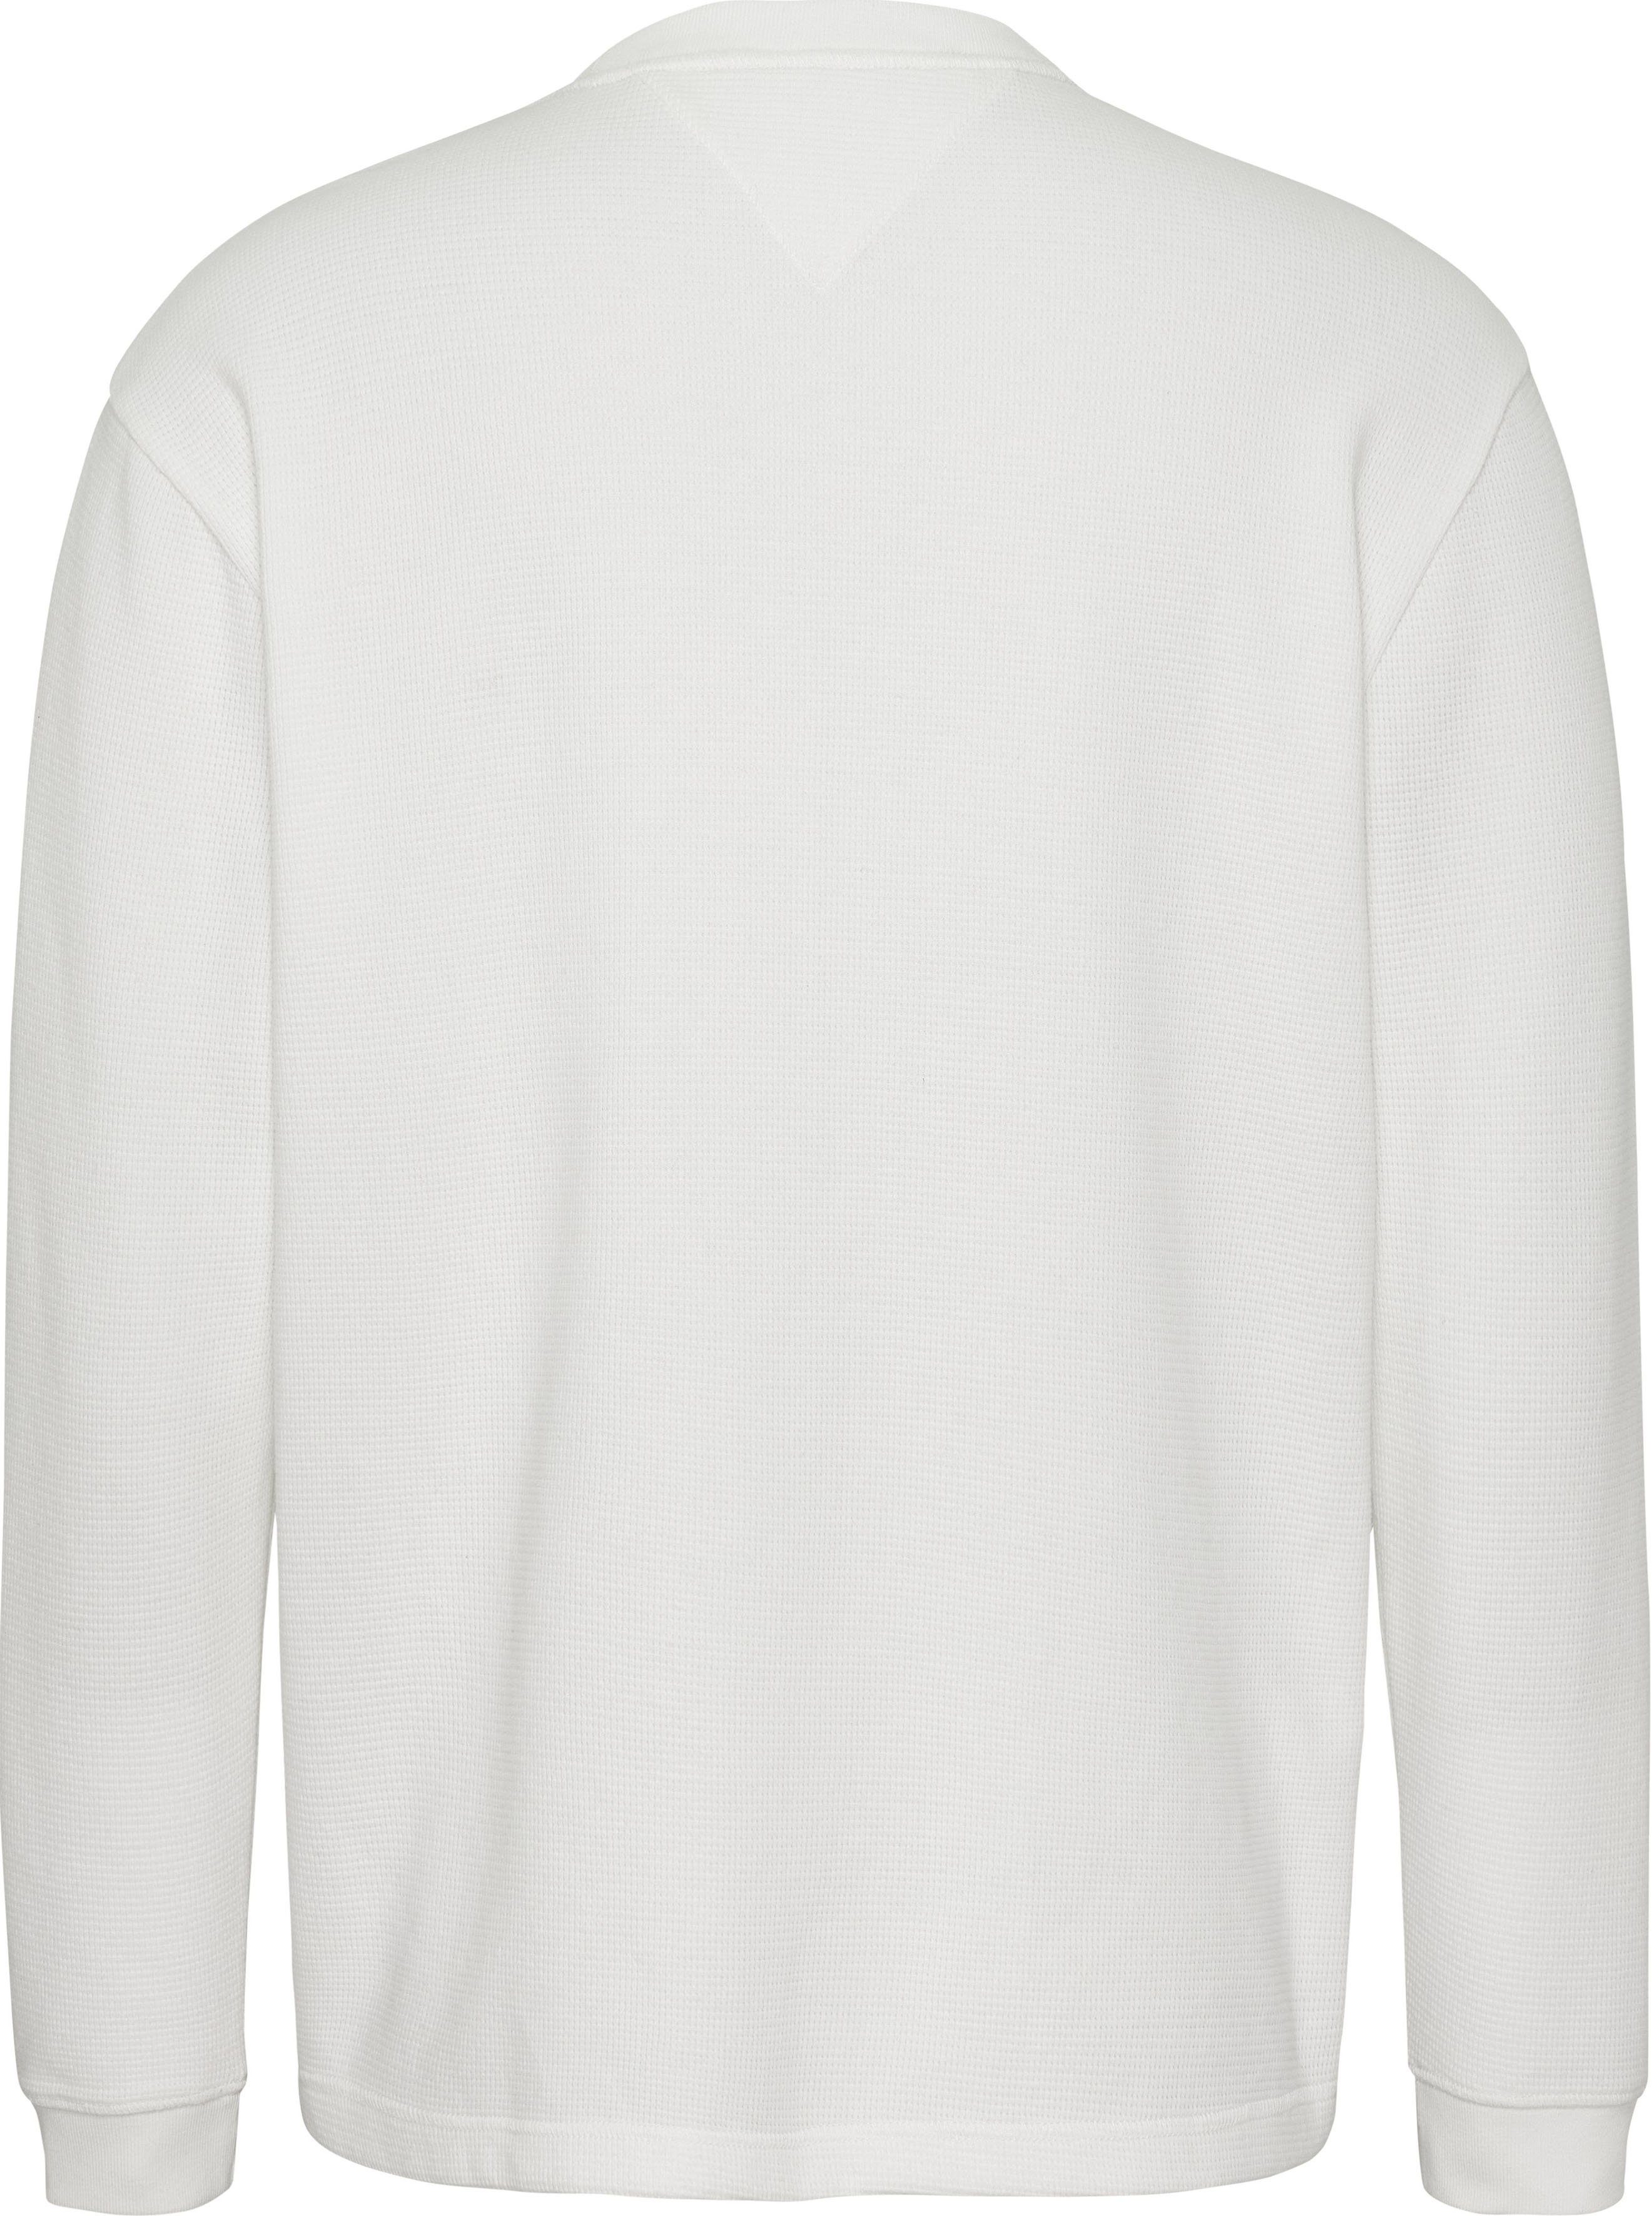 Markenlabel SOFT LS CLSC SNIT Jeans mit White Tommy TJM Langarmshirt